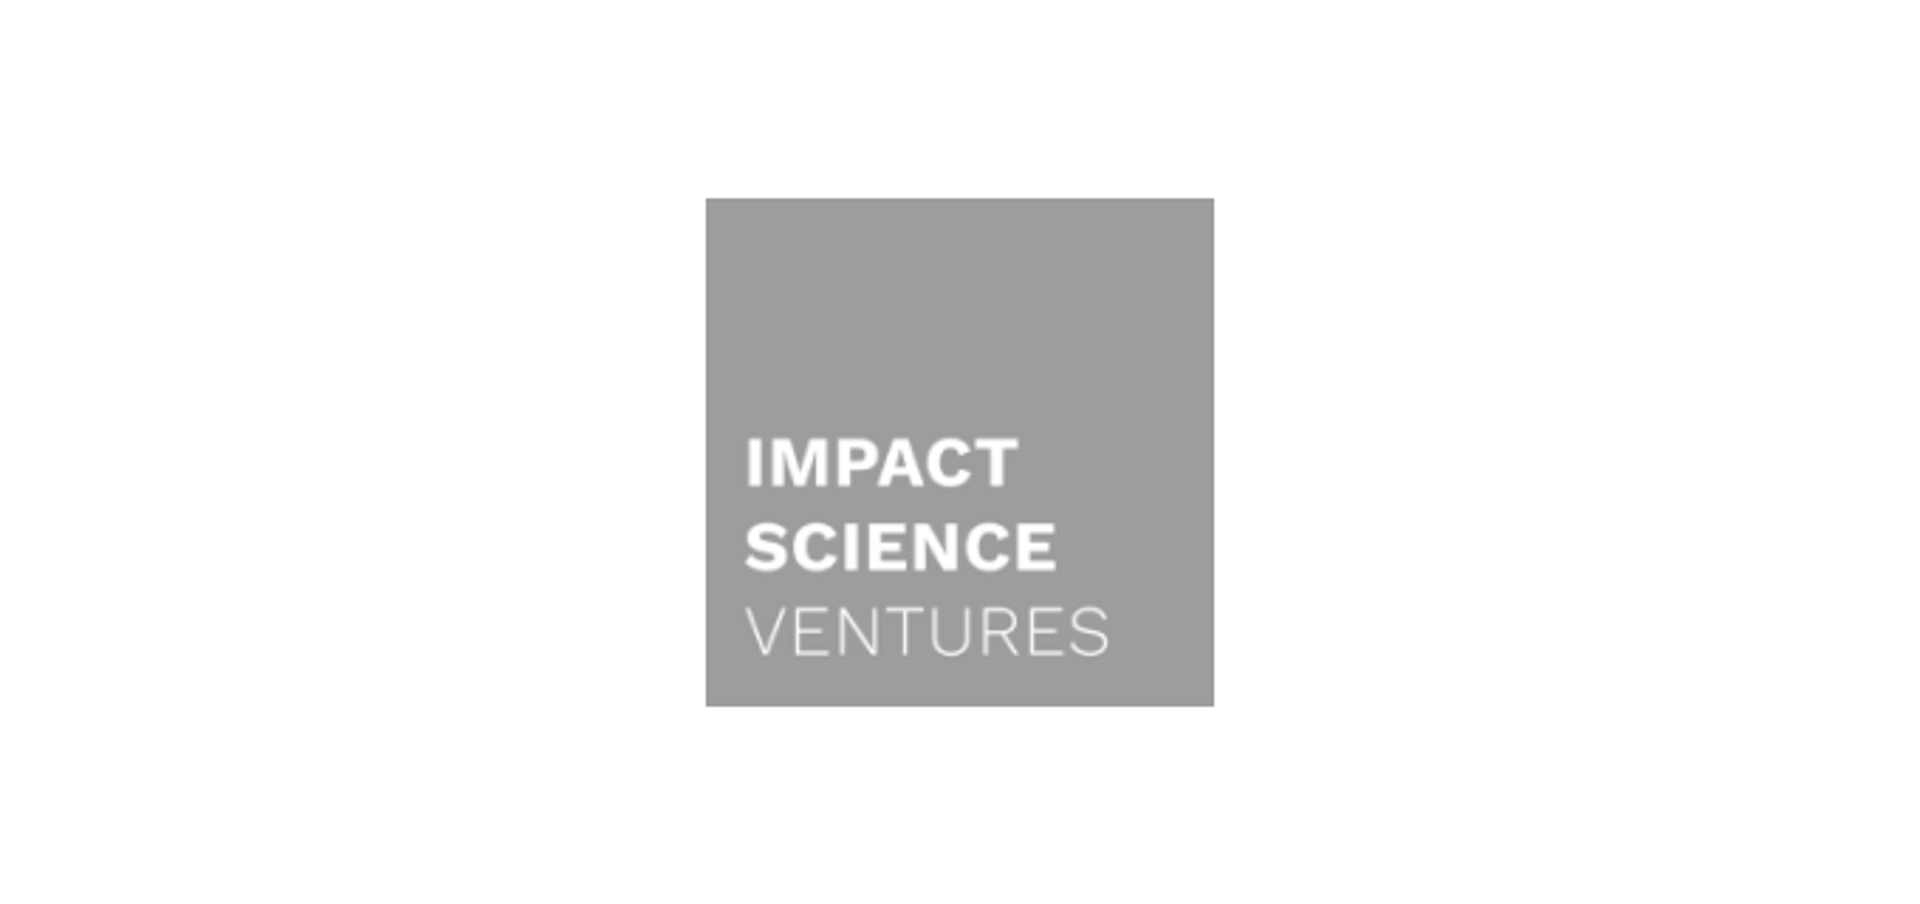 Impact Science Ventures